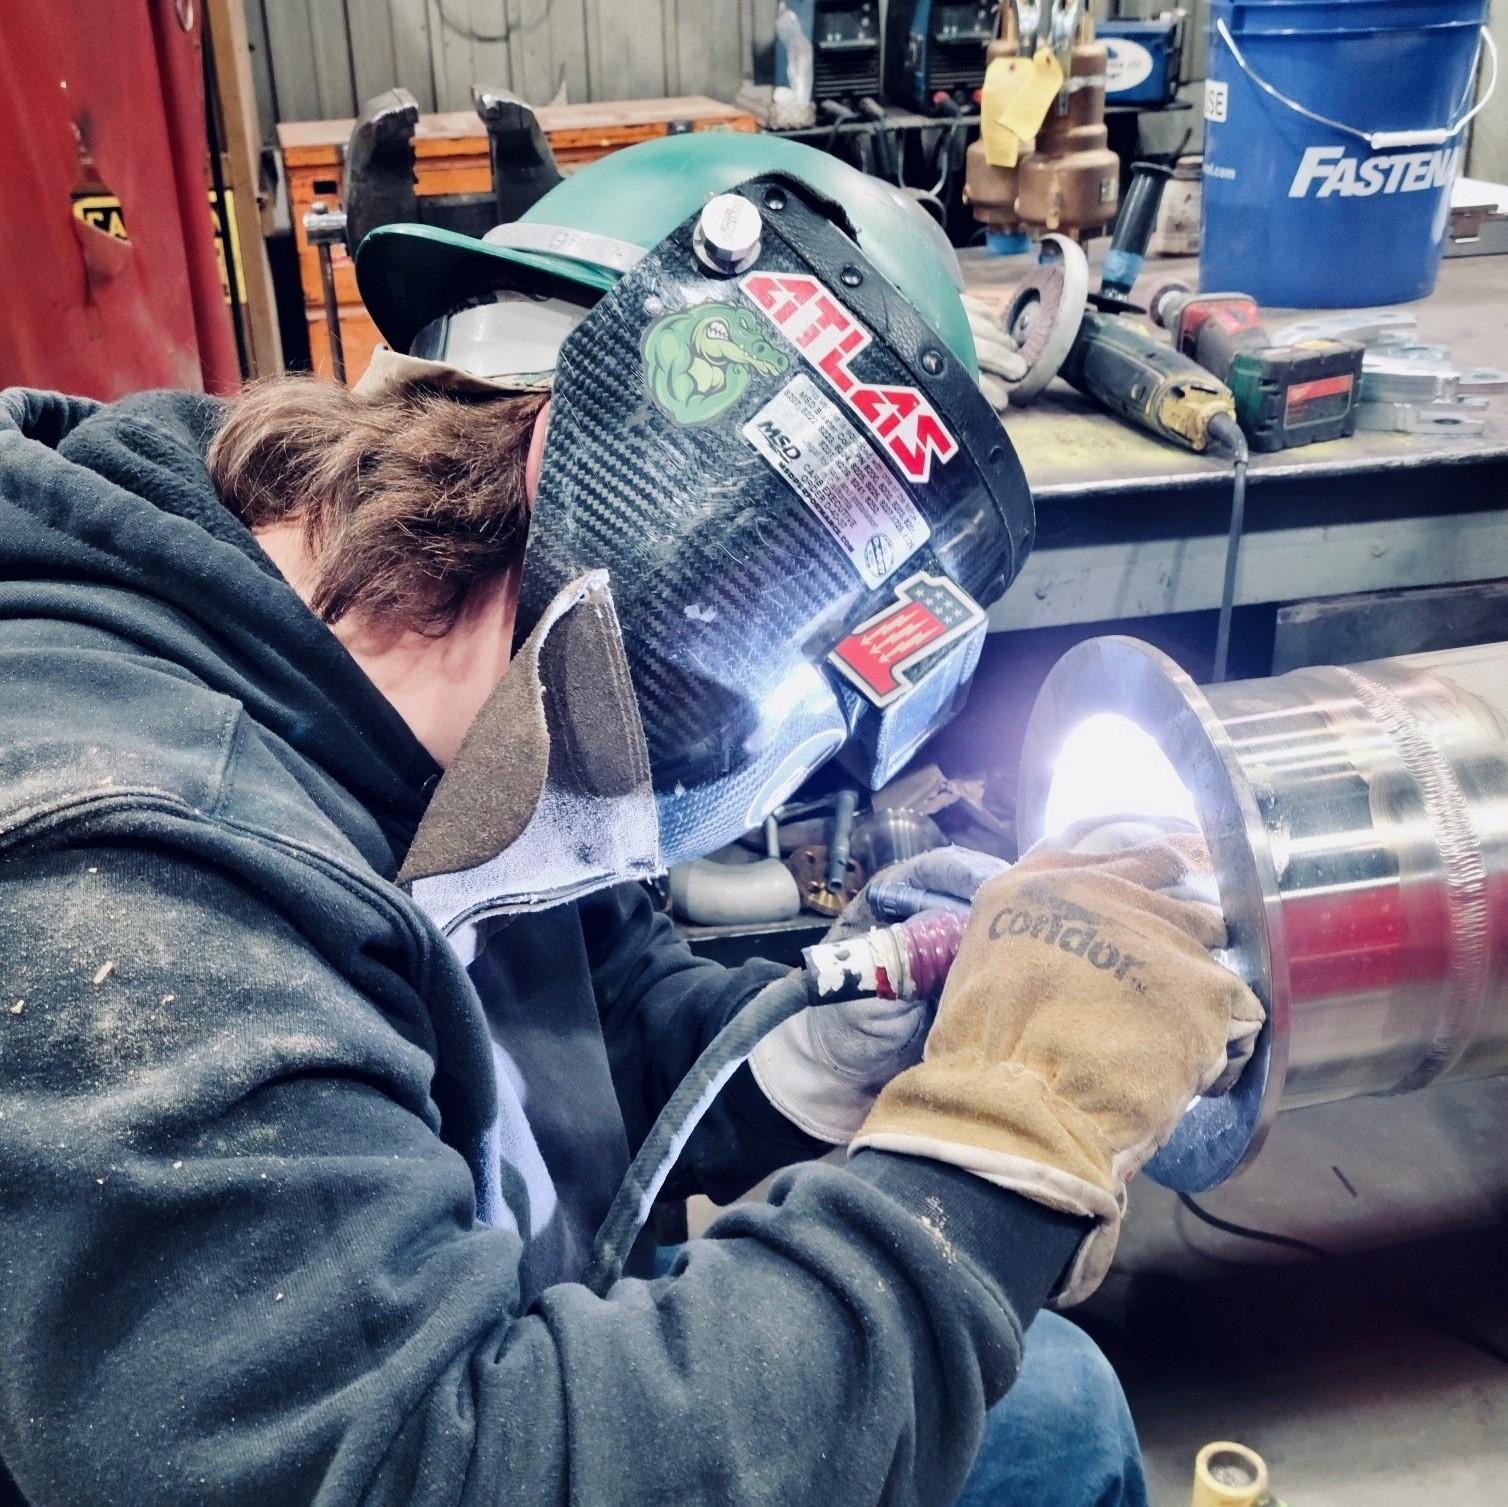 A man welding a metal pipe in a workshop.